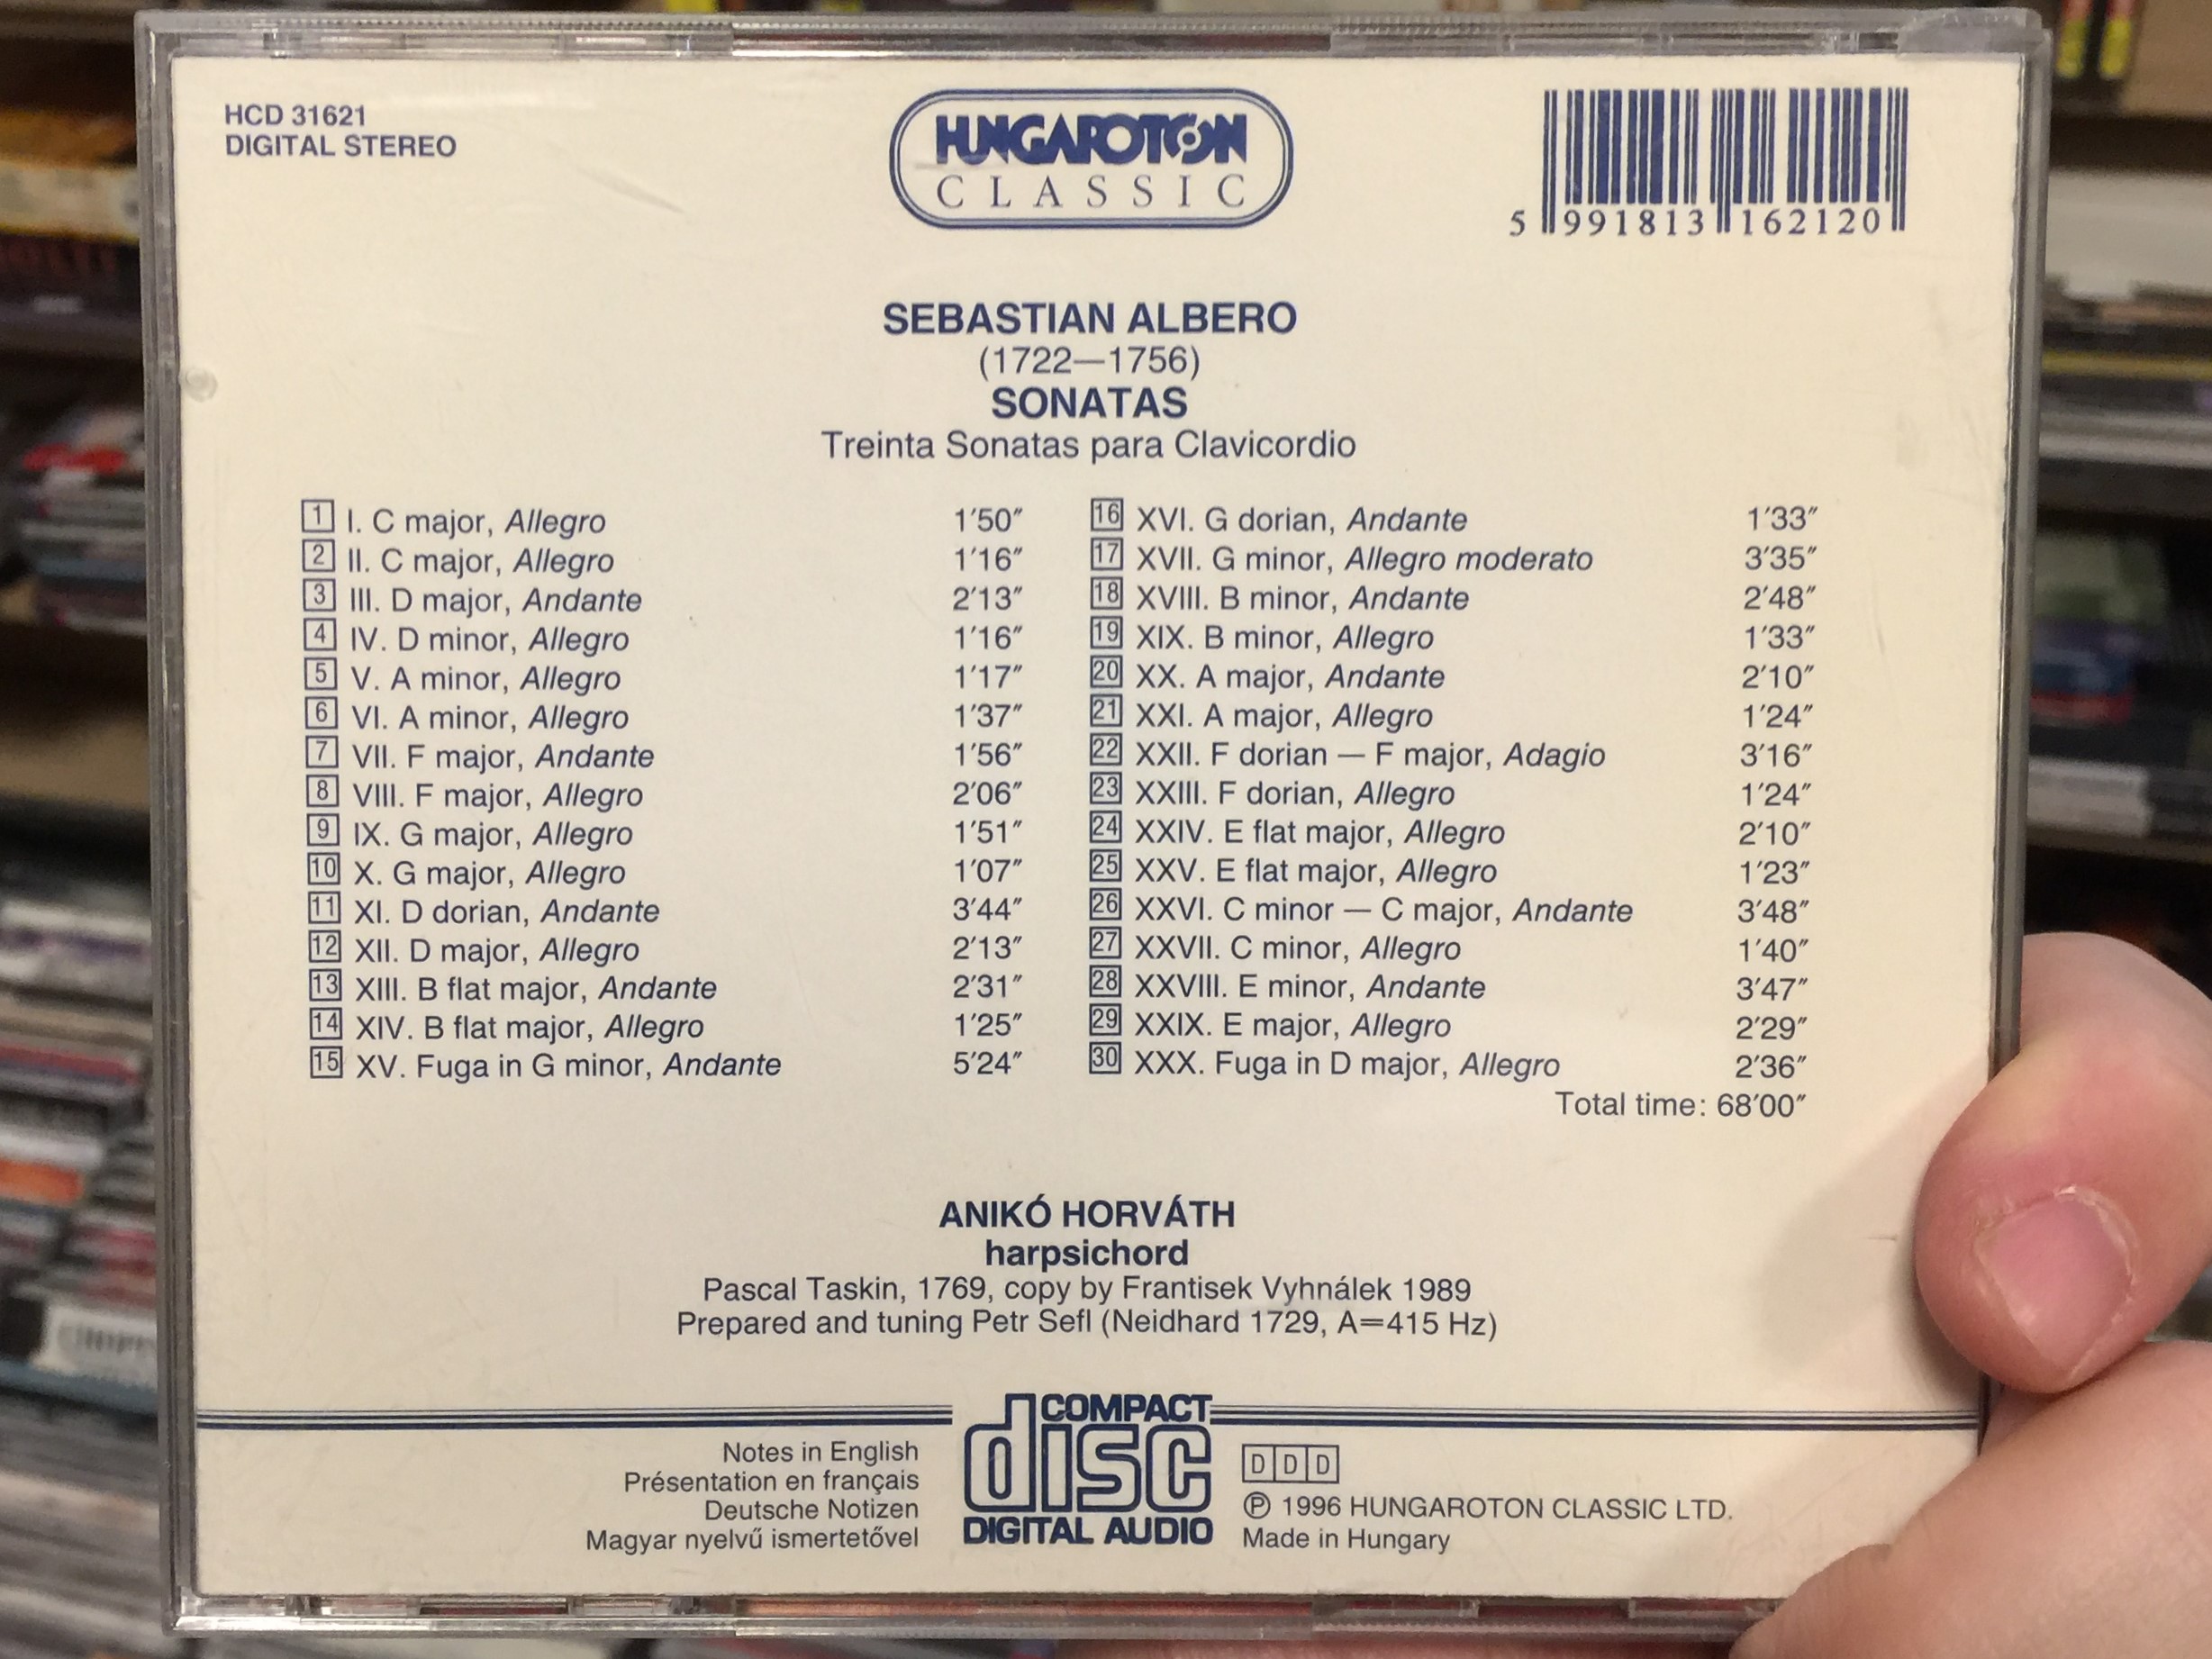 sebastian-alberto-sonatas-treinta-sonatas-para-clavicordio-aniko-horvath-harpsichord-hungaroton-classic-audio-cd-1996-stereo-hcd-31621-2-.jpg